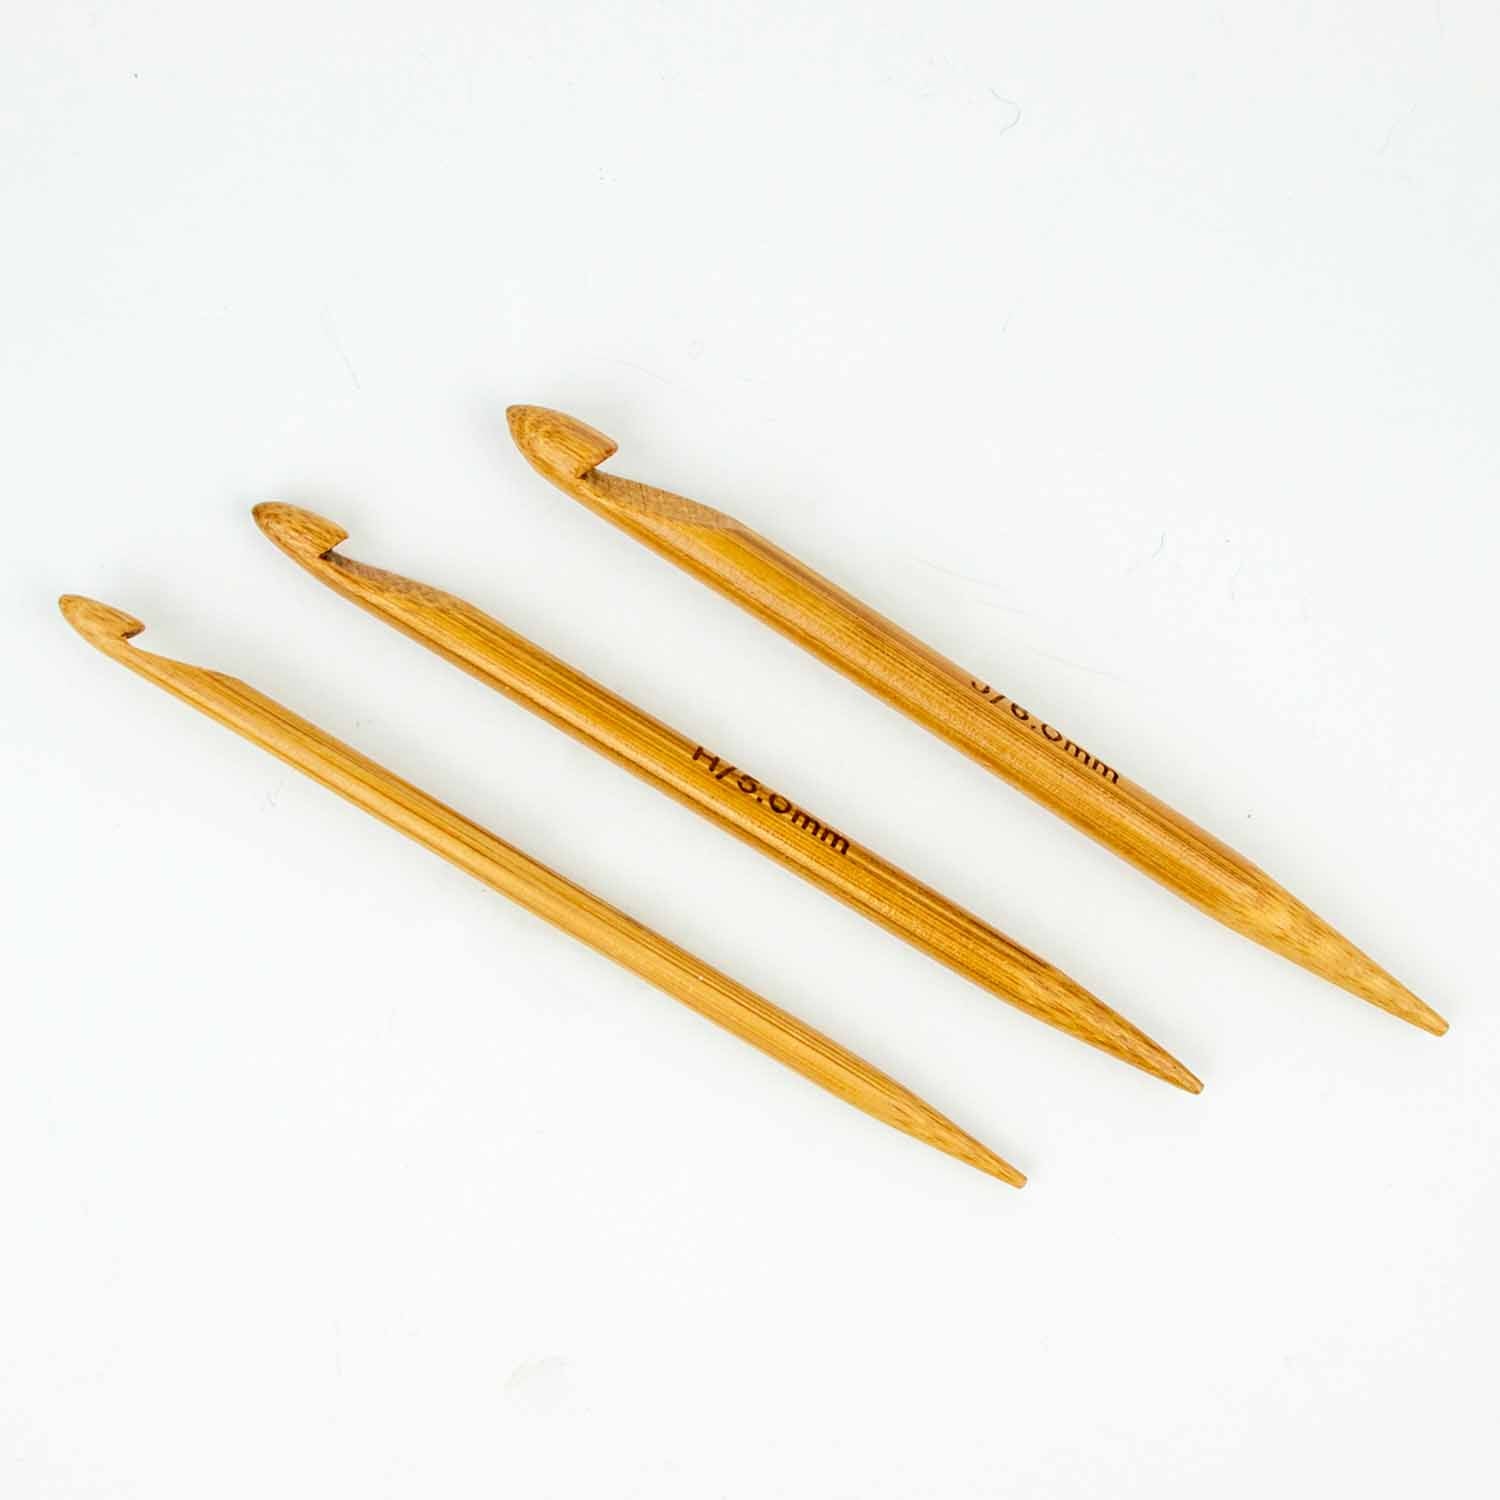 Duo Wooden Repair Hooks - Set of 3